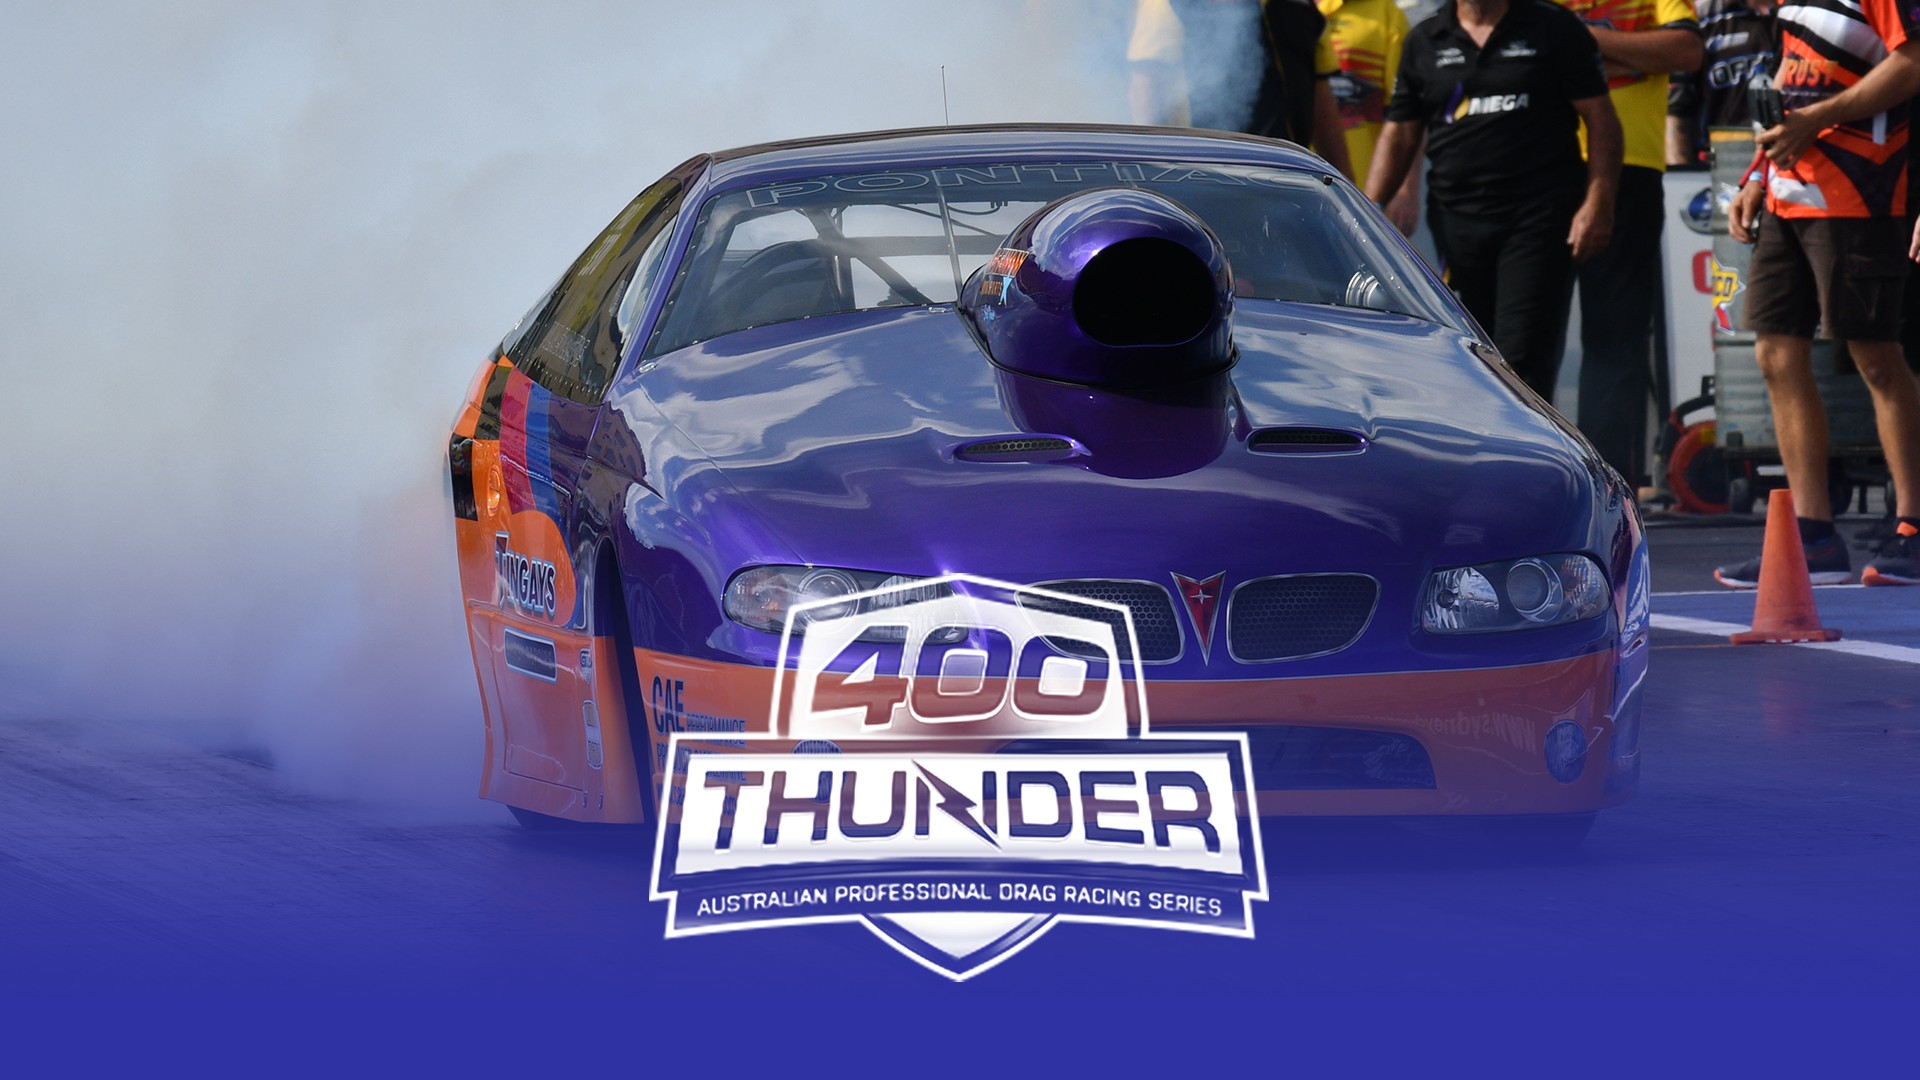 400 Thunder Australian Drag Racing Series